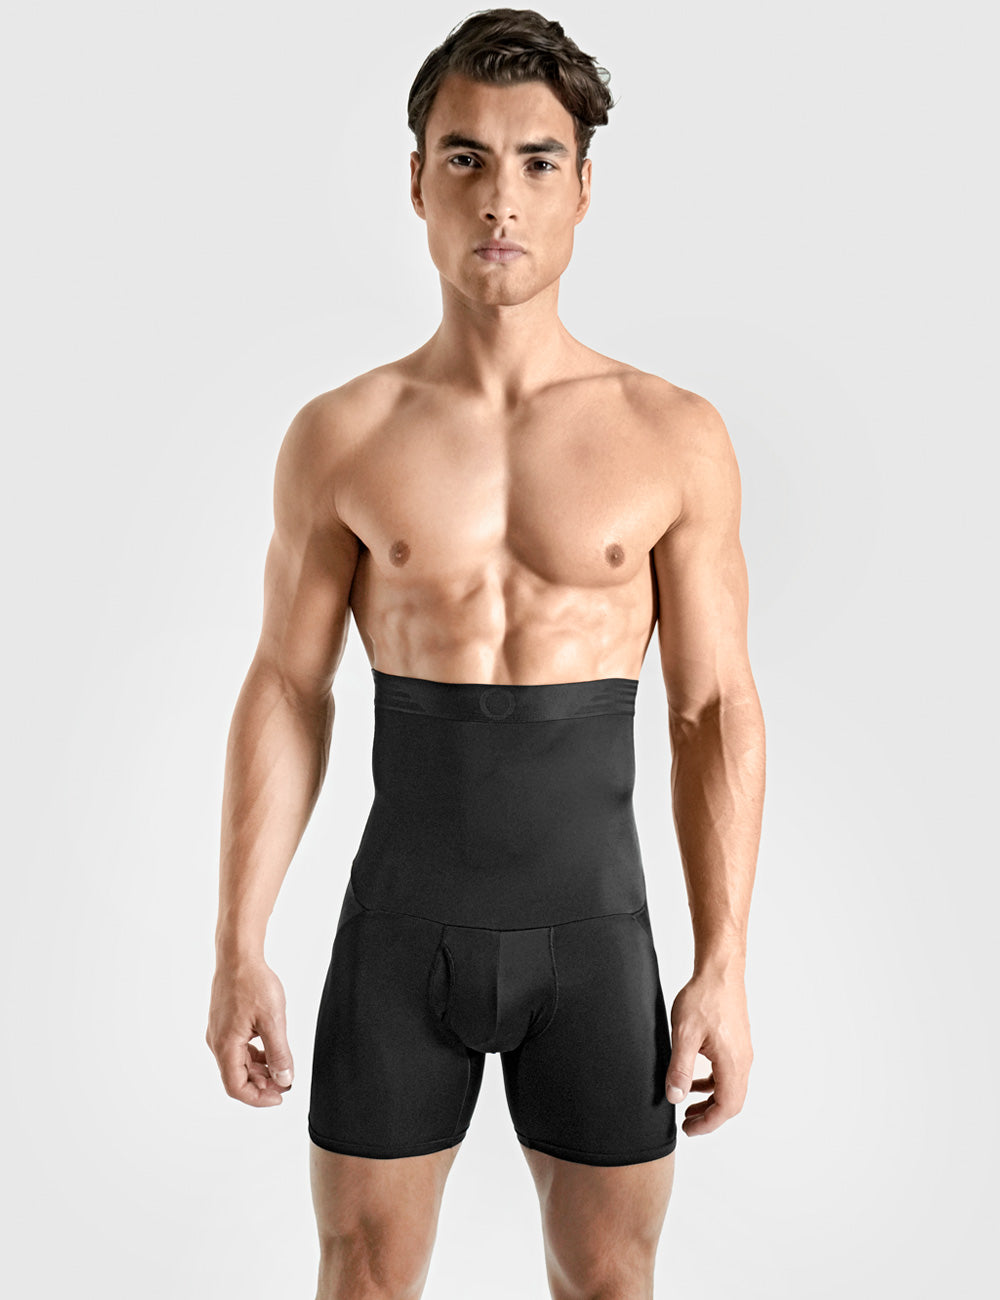 Men's Body Shaper Boxer Brief Shorts Tummy Control High Waist